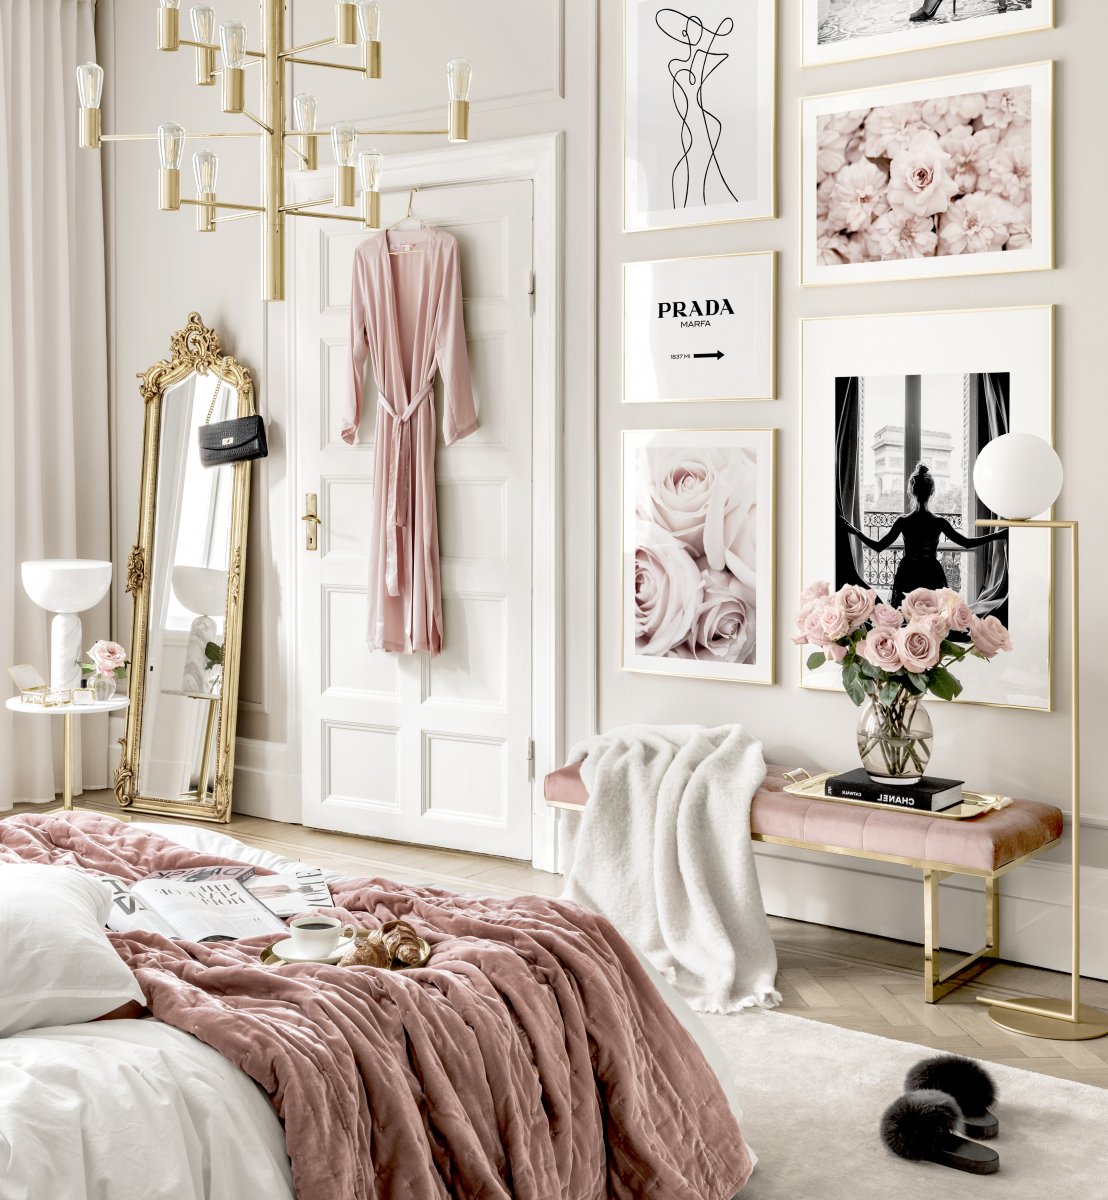 Bekend Vervelend microfoon Fashion slaapkamer fotowand bloemen poster gouden fotolijsten